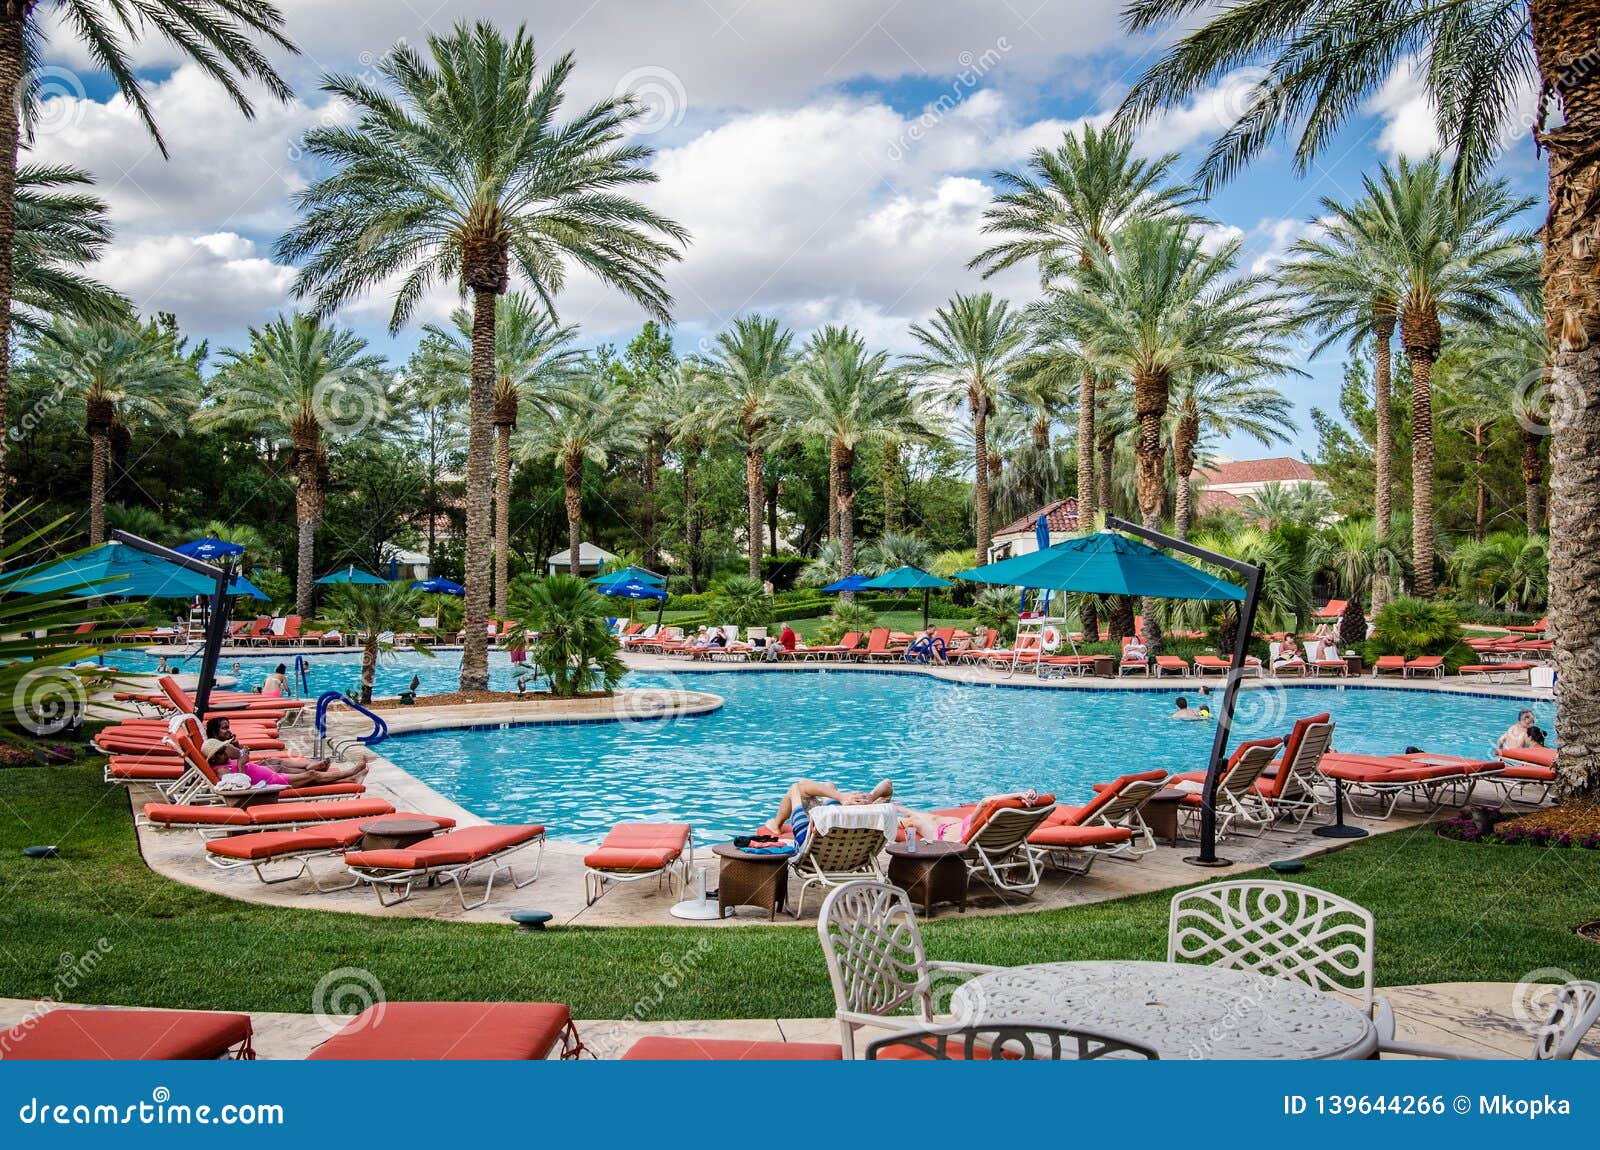 Las Vegas, Nevada - Outdoor Tropical Pool Area at the JW Marriott